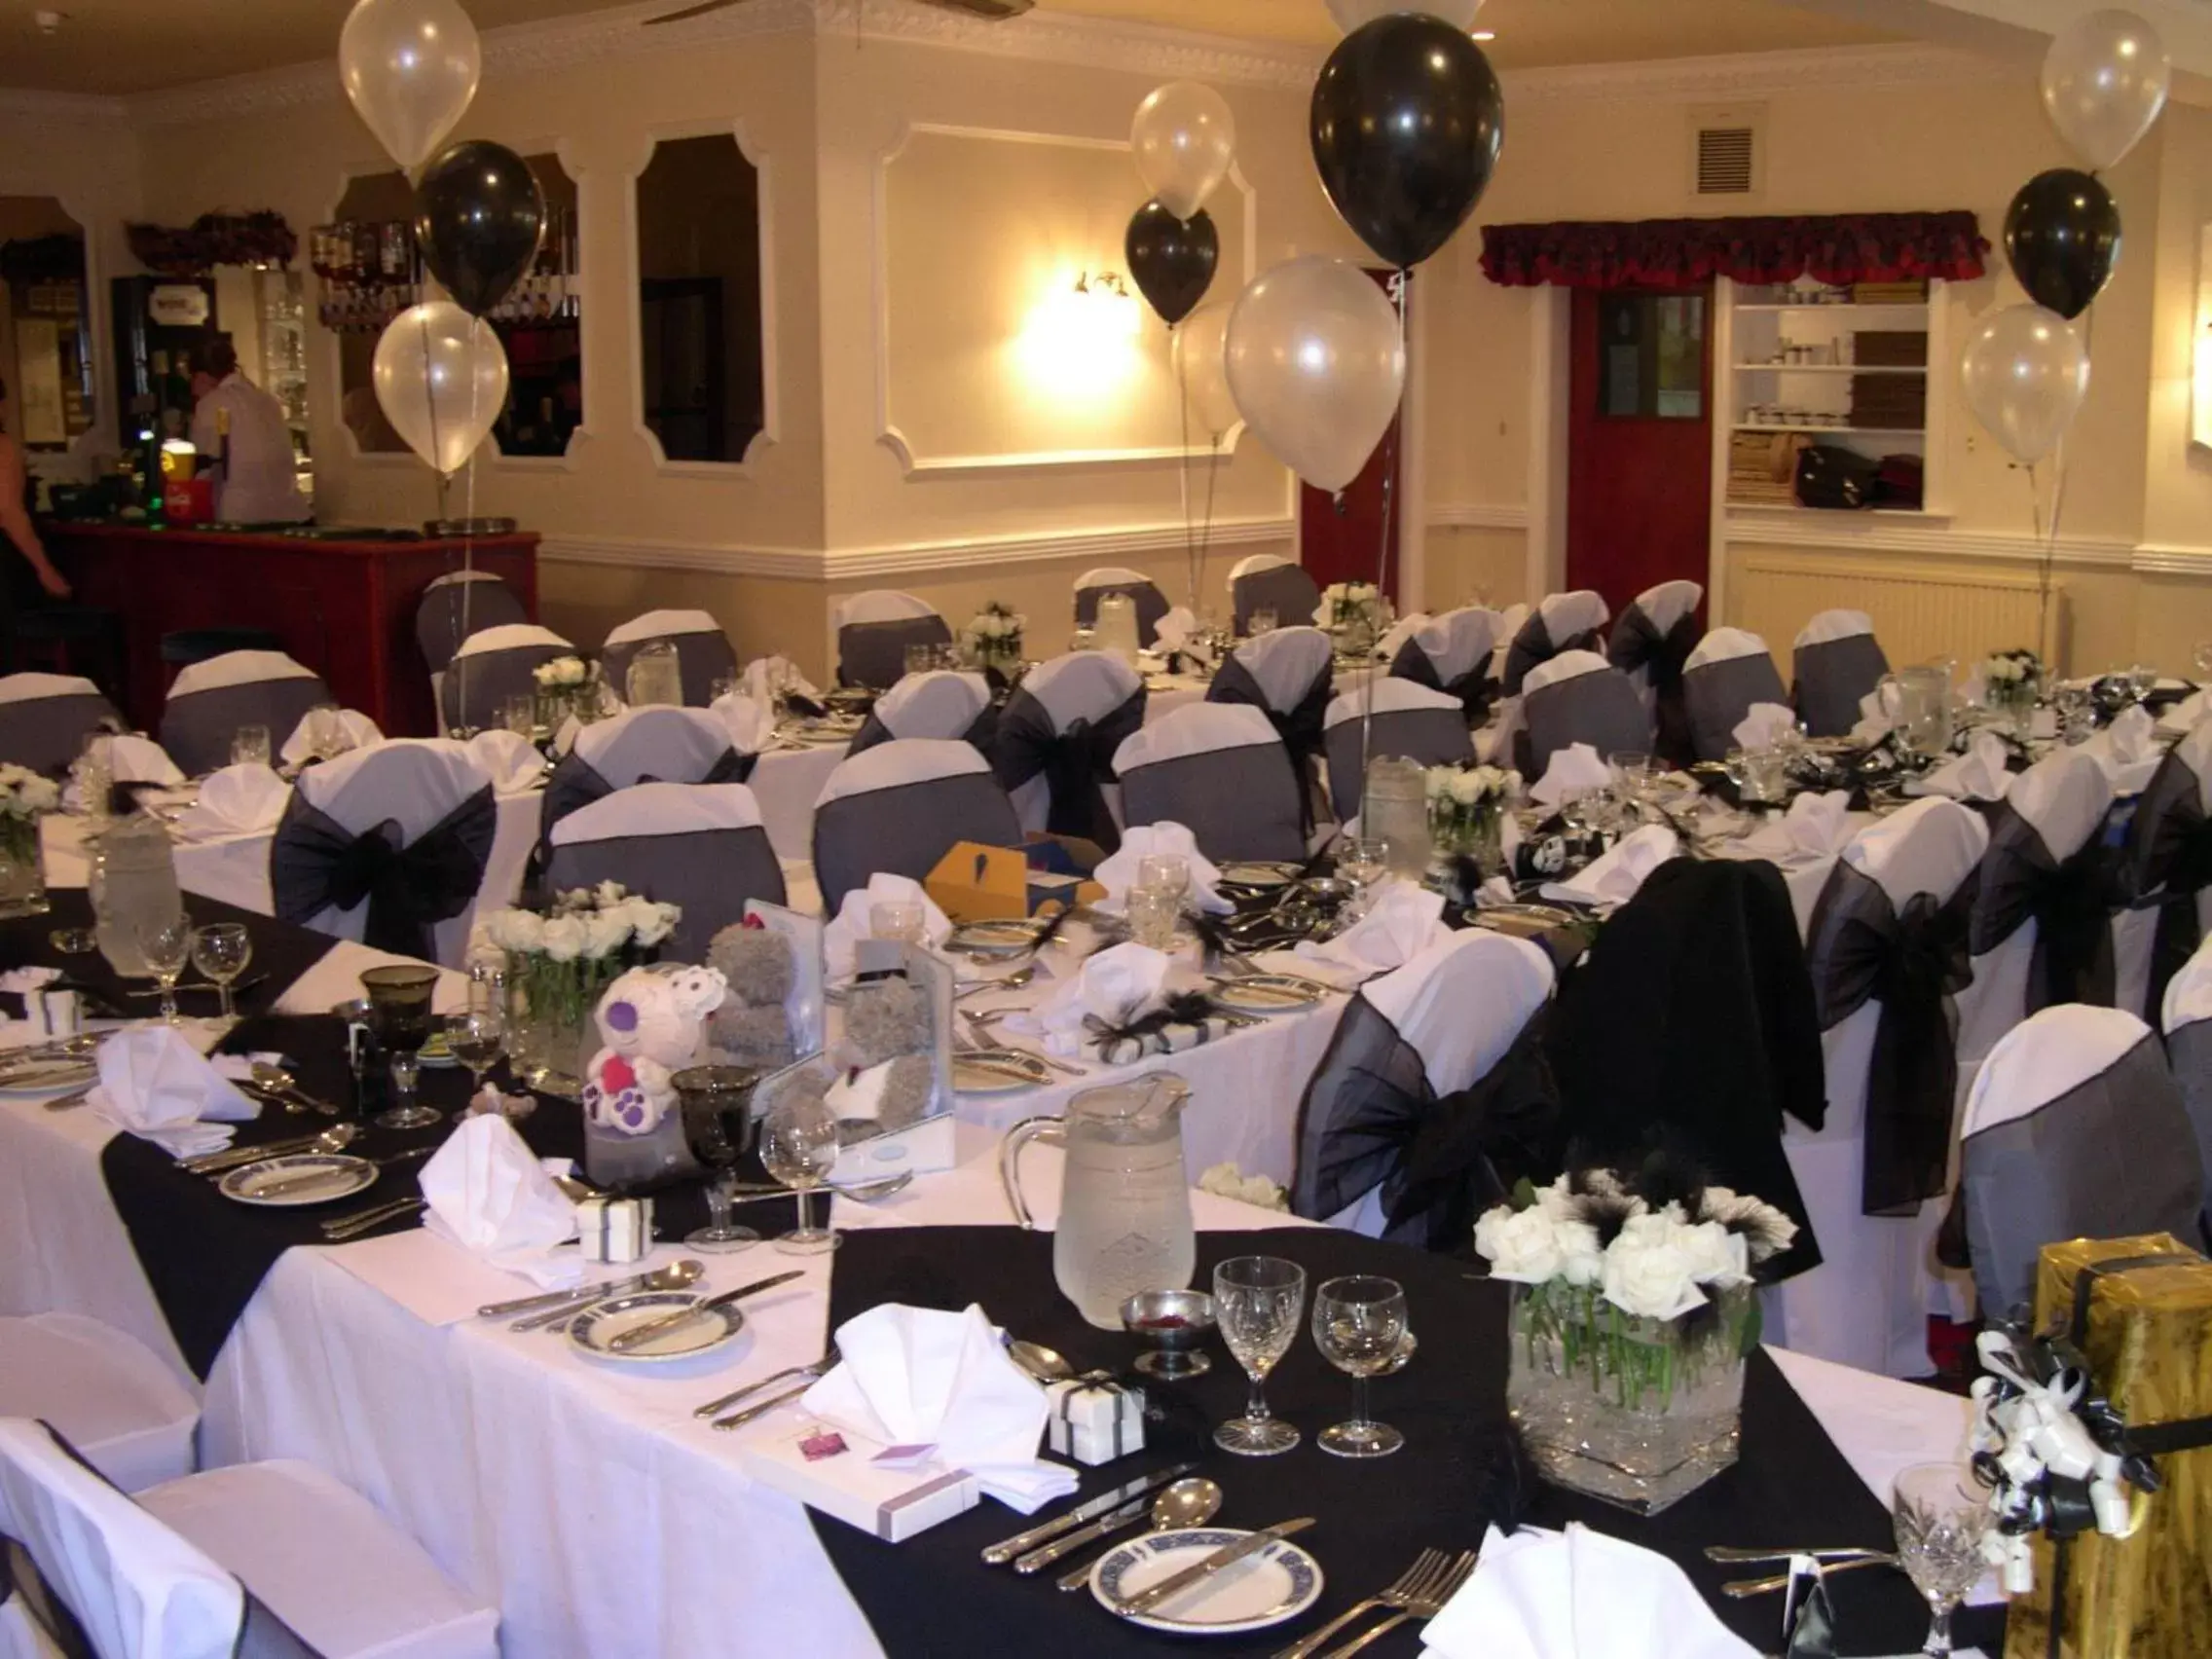 Banquet/Function facilities, Banquet Facilities in The Waverley Hotel